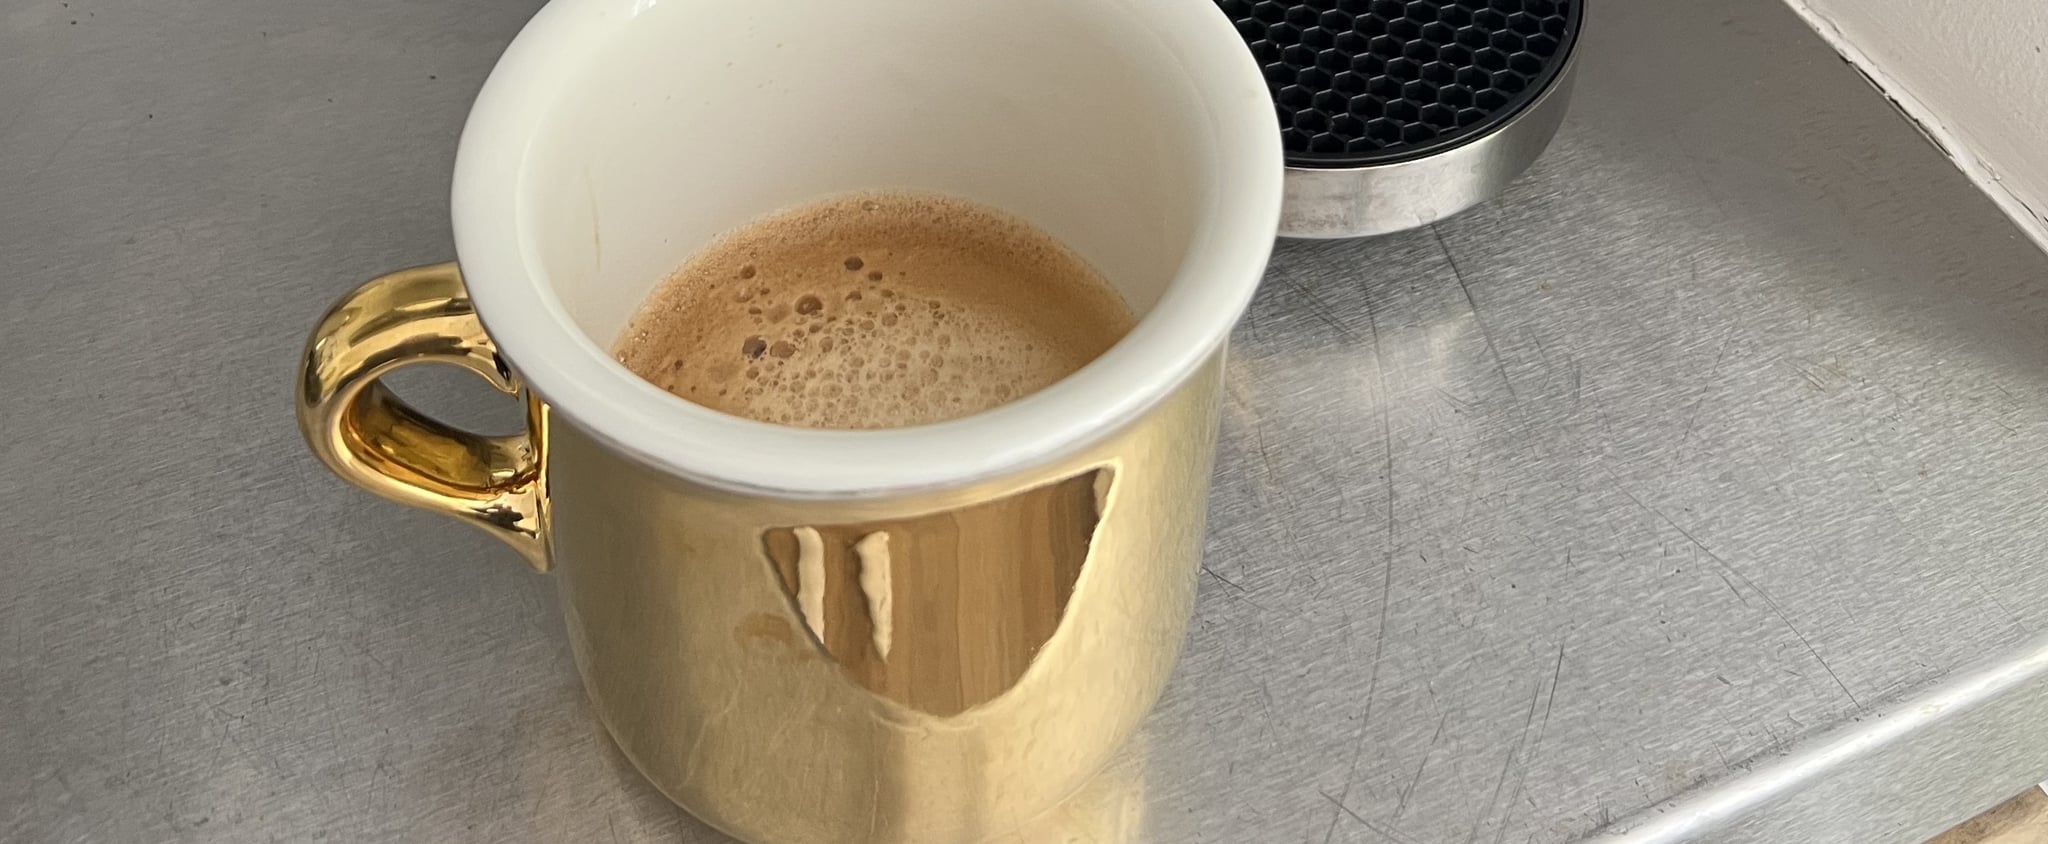 Nespresso VertuoPlus豪华咖啡机编辑评论